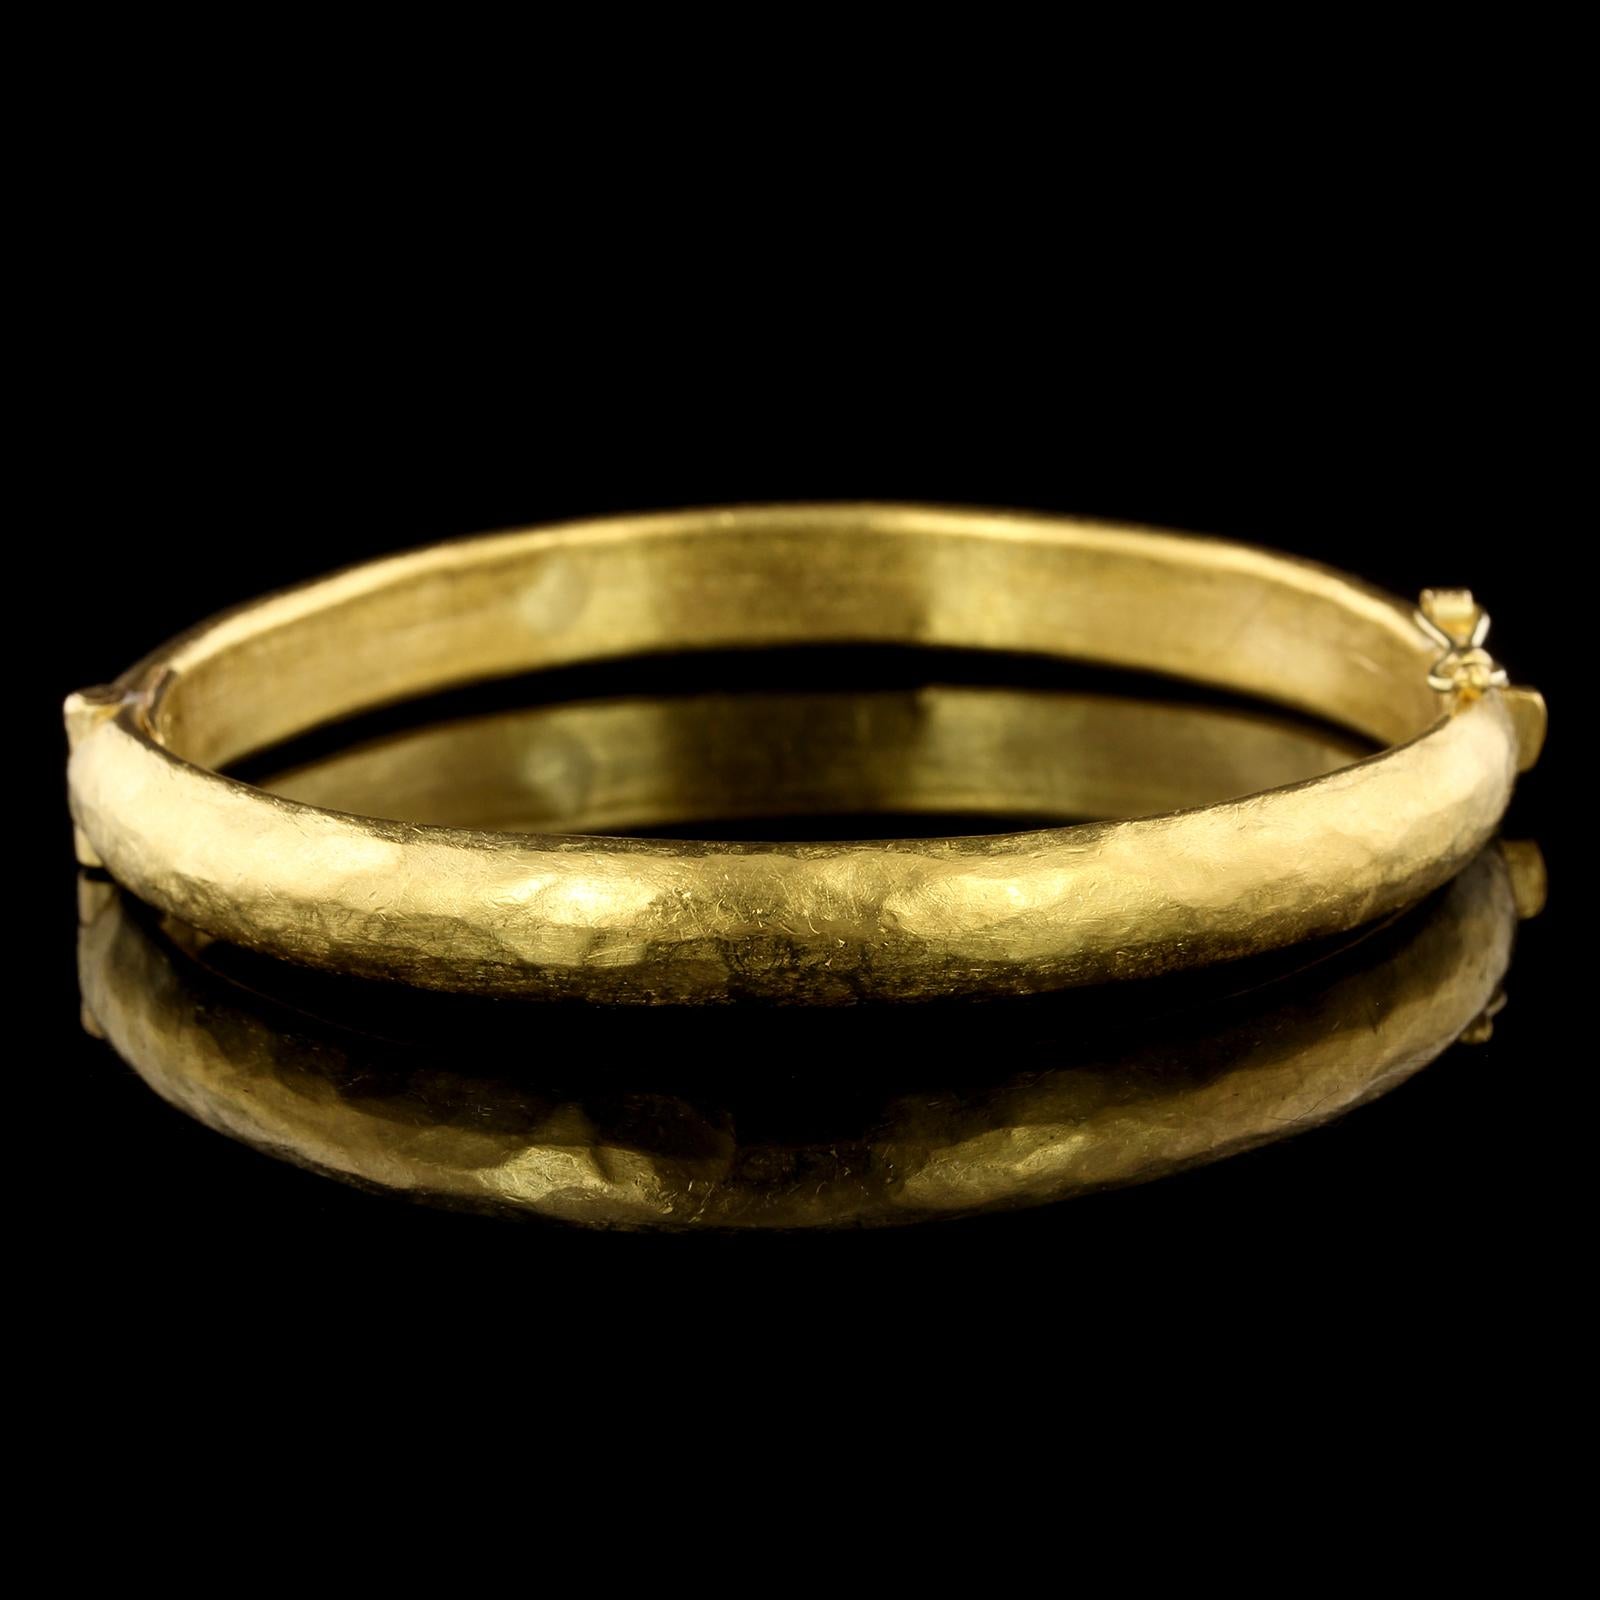 Yossi Harari 24K Yellow Gold Bangle Bracelet. The bracelet is a hinged bangle, interior
circumference 7